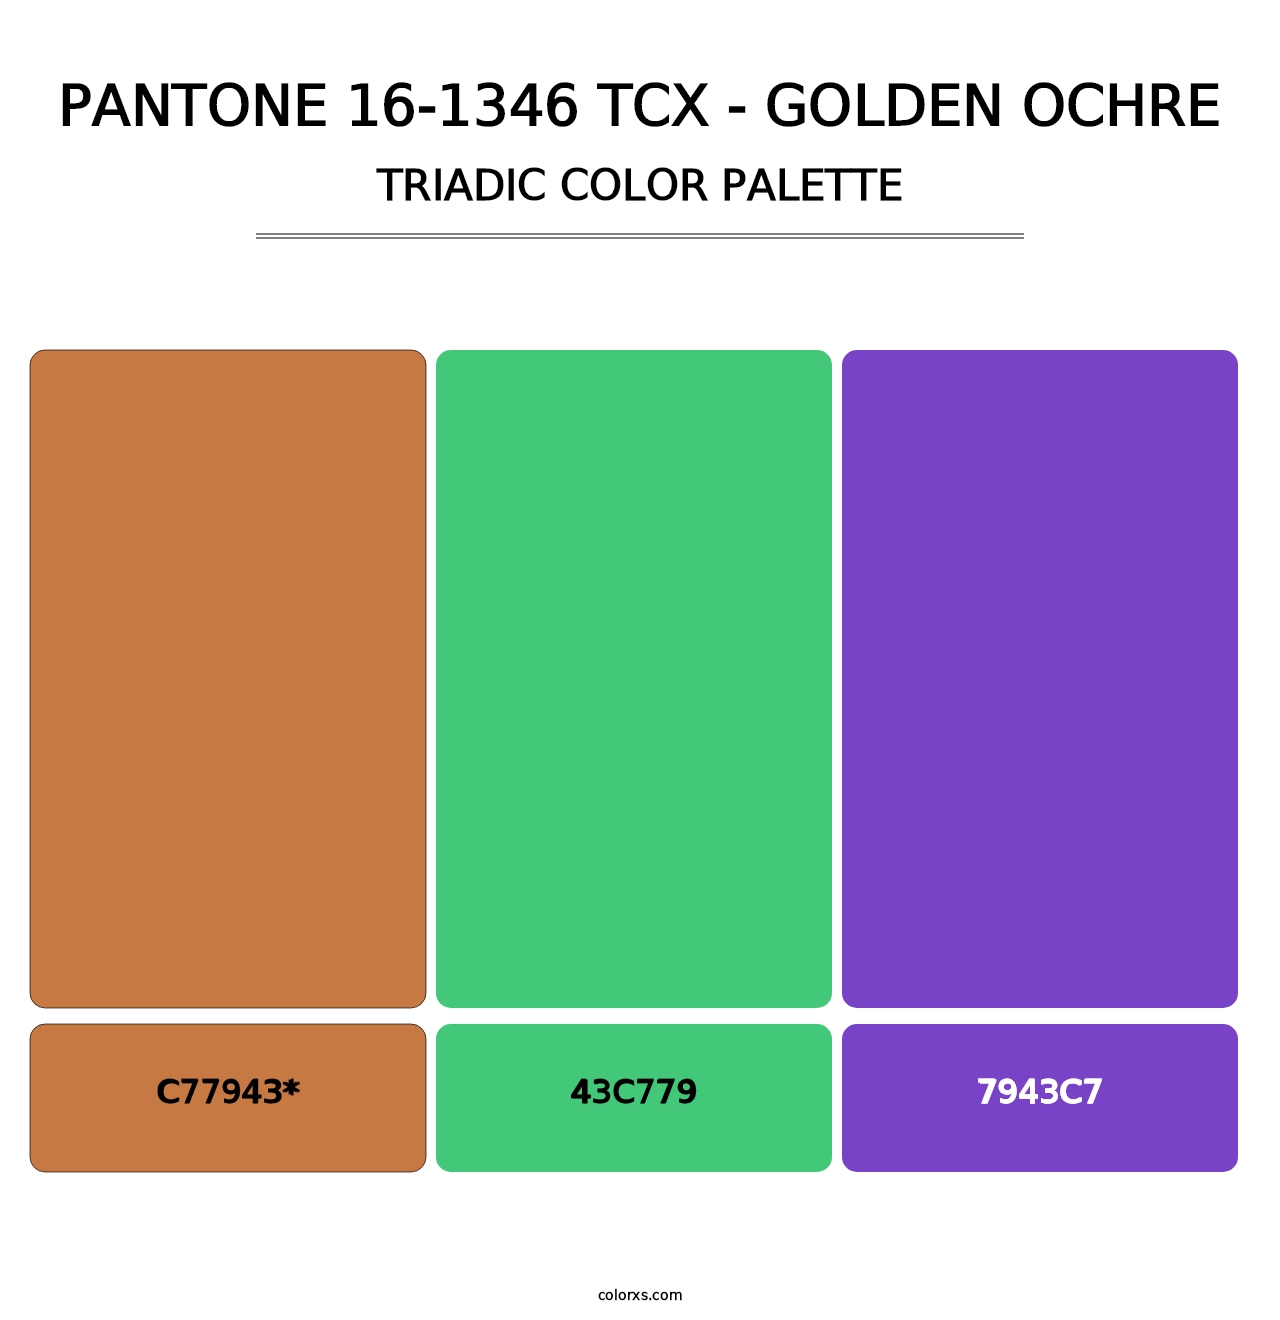 PANTONE 16-1346 TCX - Golden Ochre - Triadic Color Palette